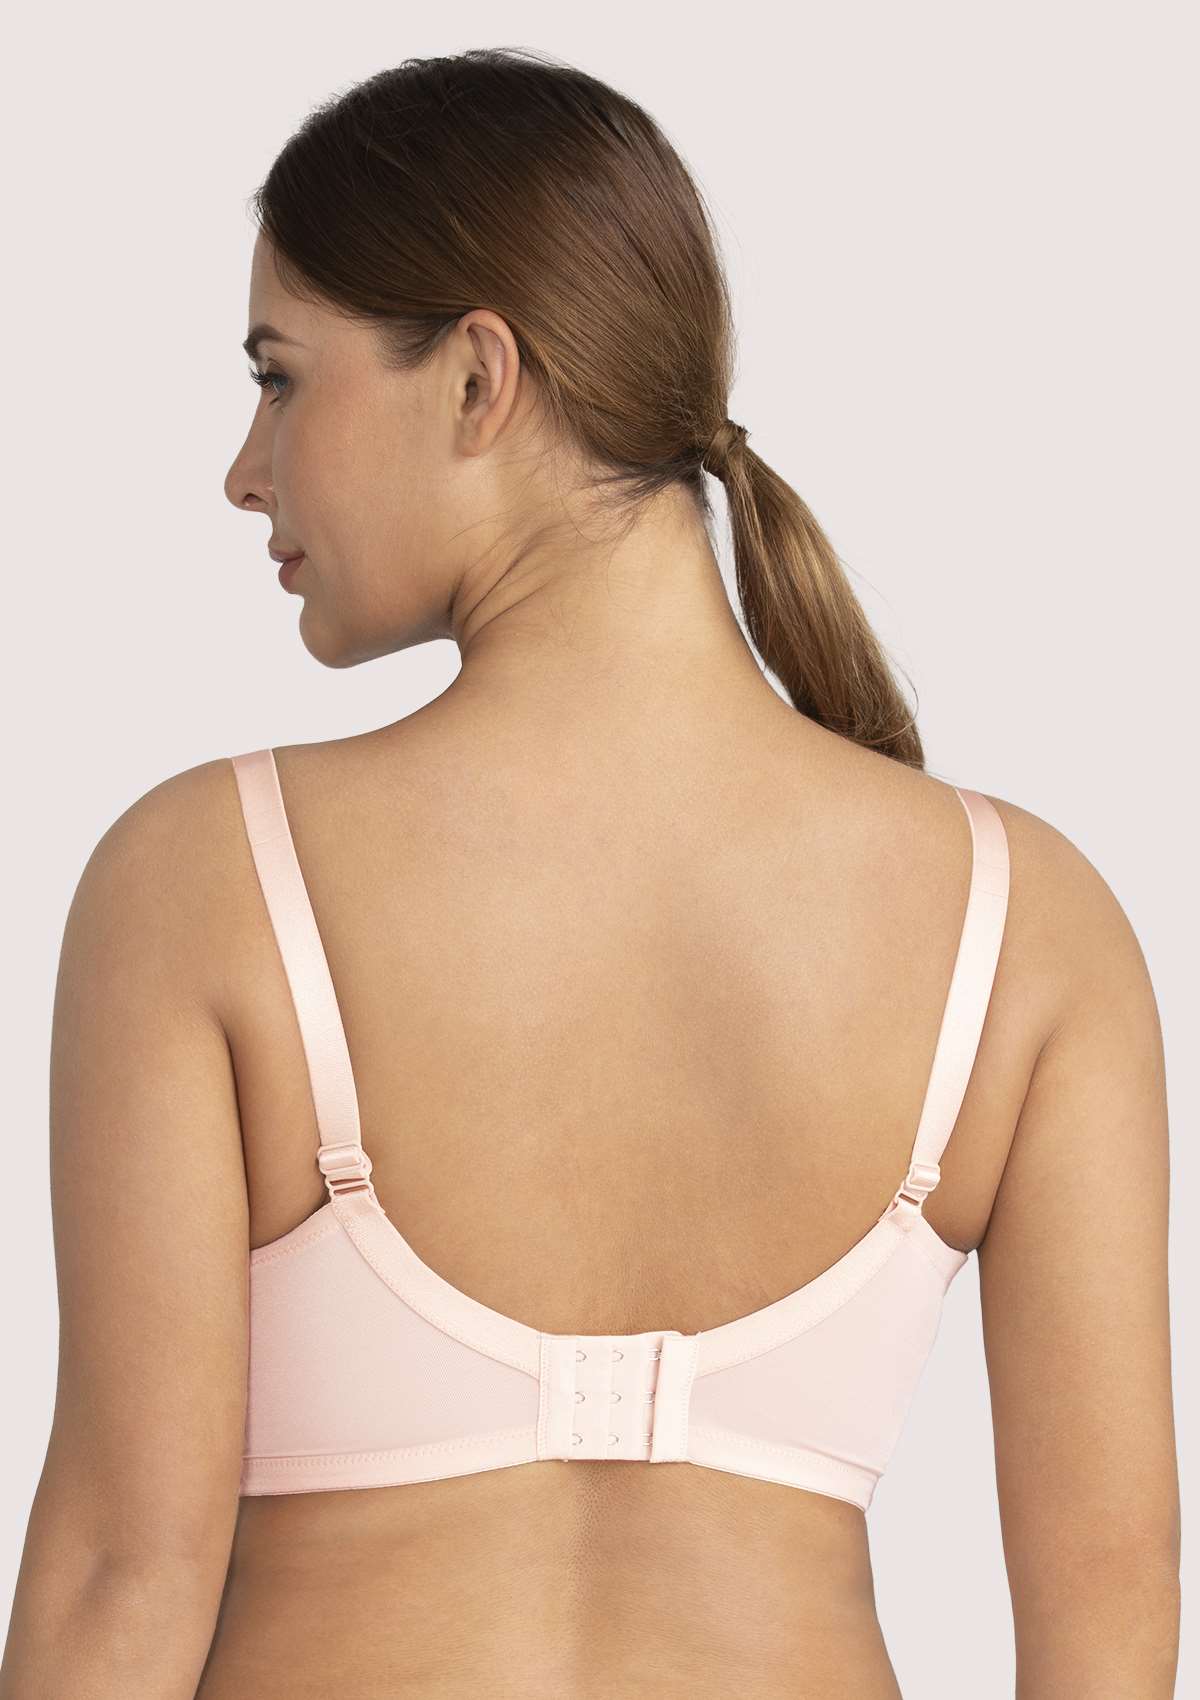 HSIA Sunflower Matching Bra And Panties Set: Comfortable Plus Size Bra - Pink / 38 / H